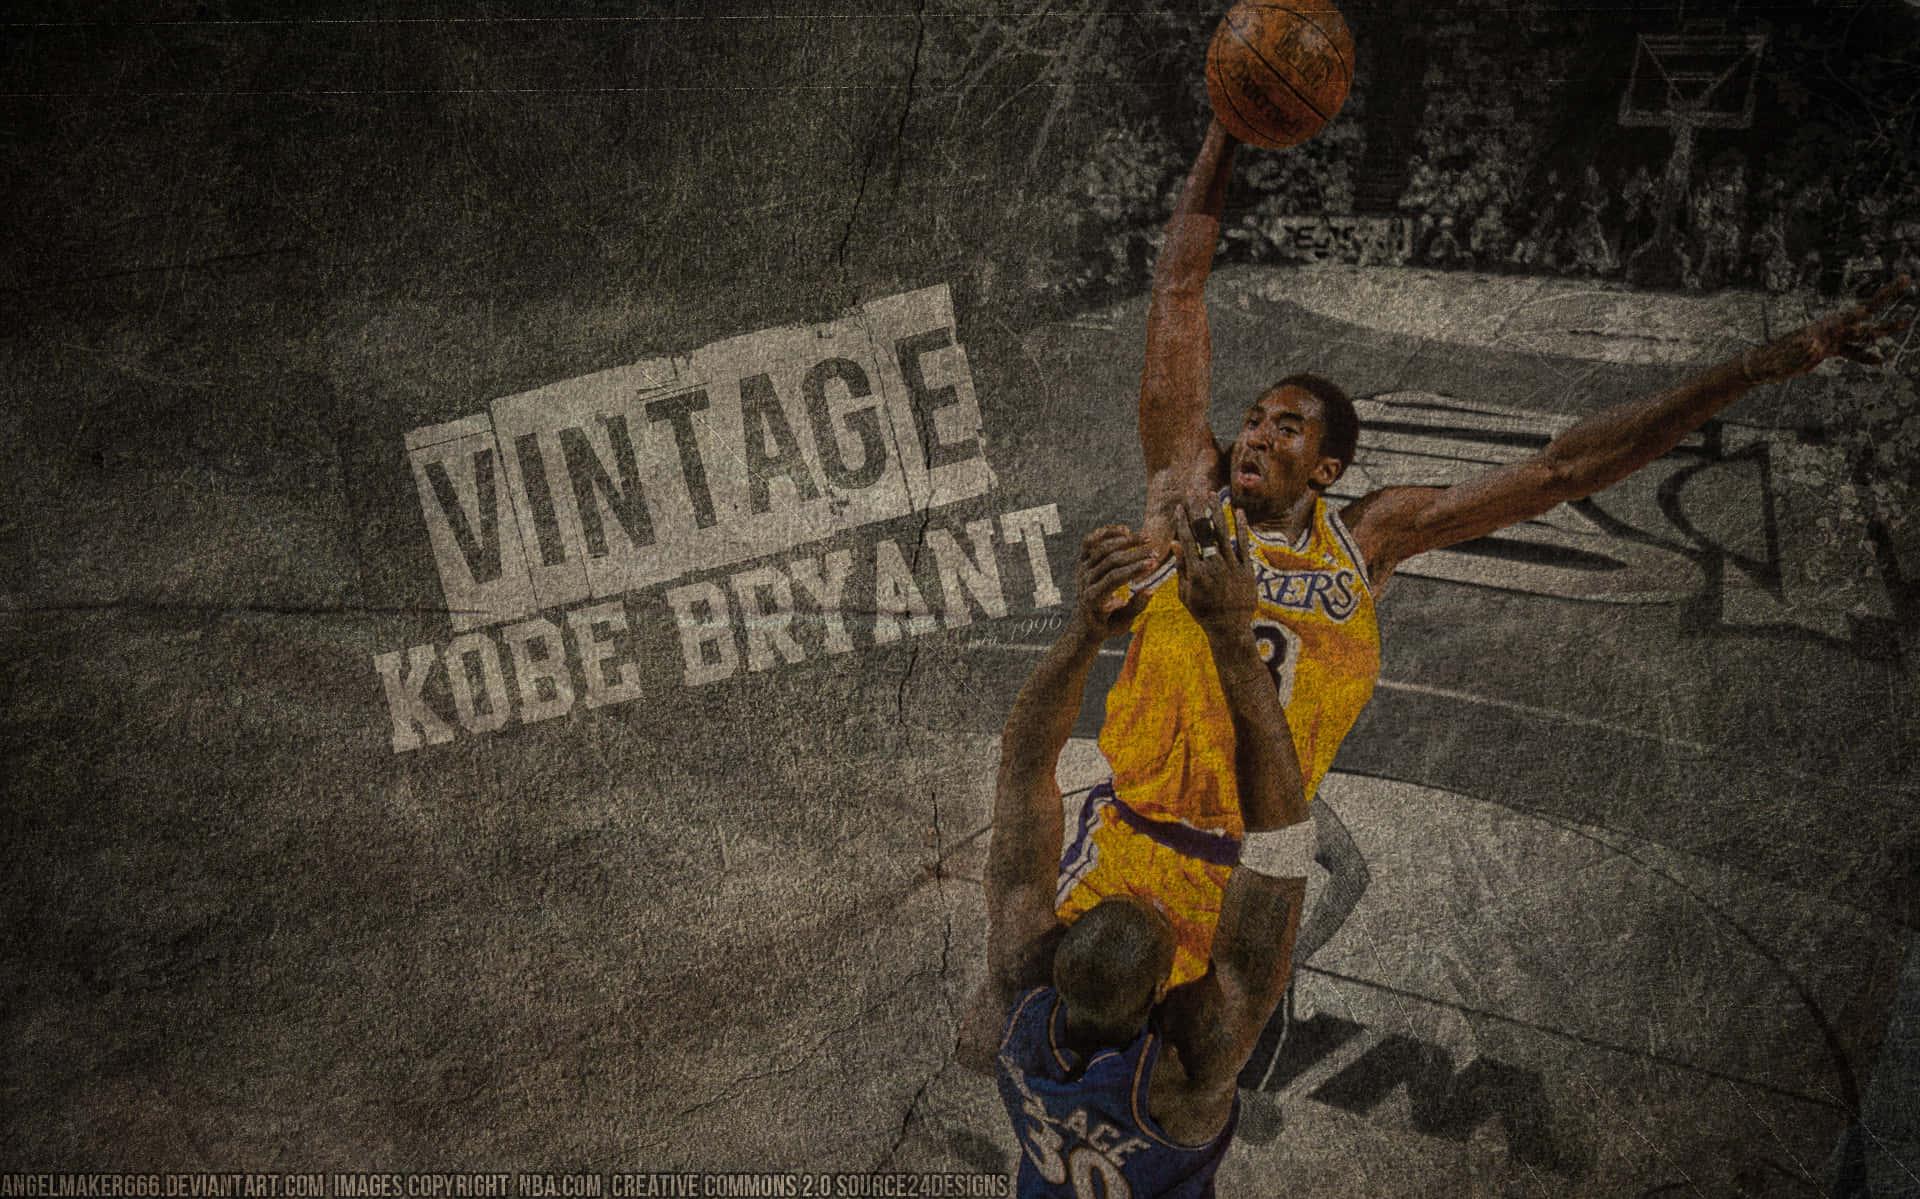 Kobe Bryant Making History On The Basketball Court